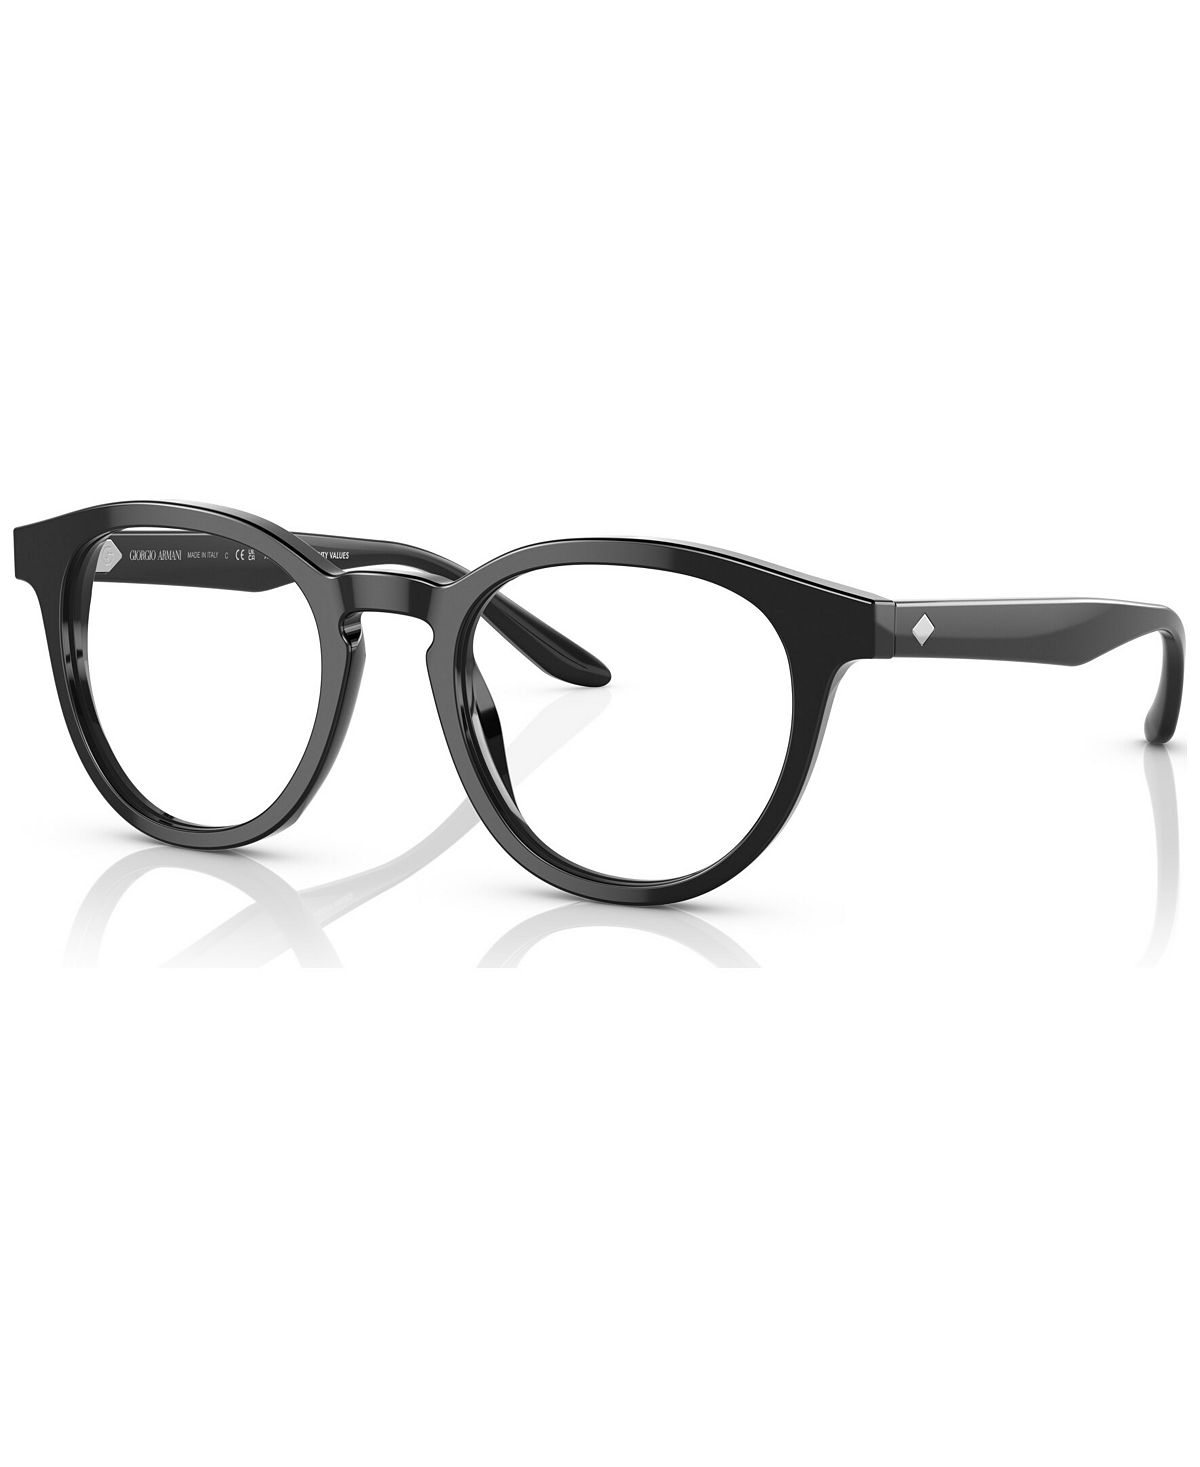 Мужские очки Phantos, AR722748-O Giorgio Armani цена и фото